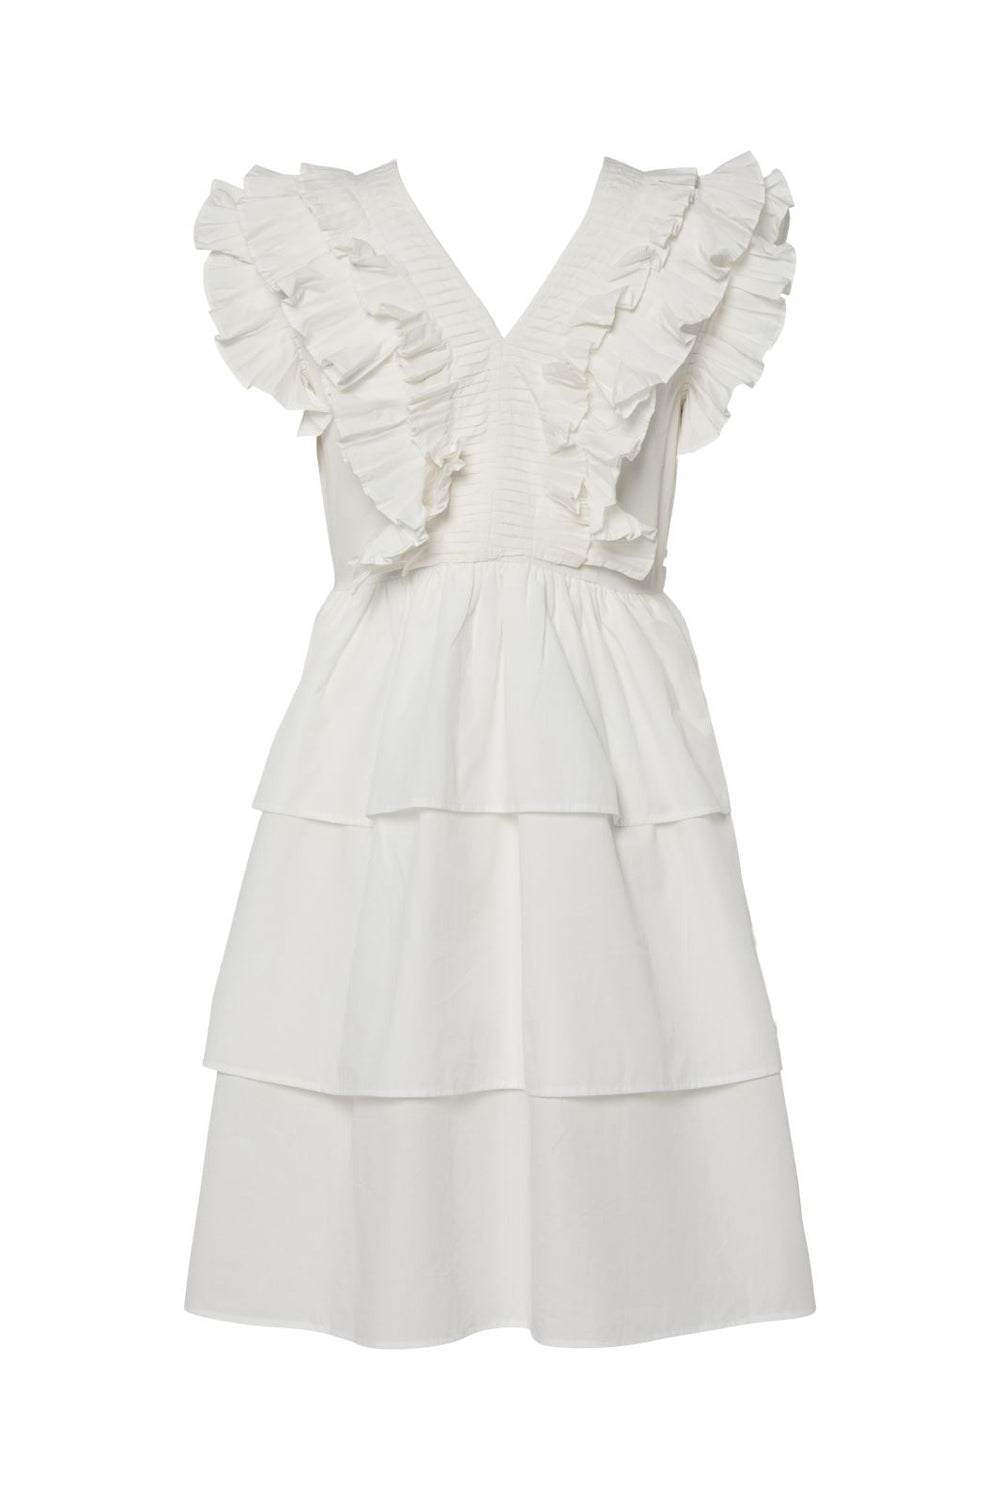 Y.A.S - Yasruna Ruffle Dress - 4726806 Star White